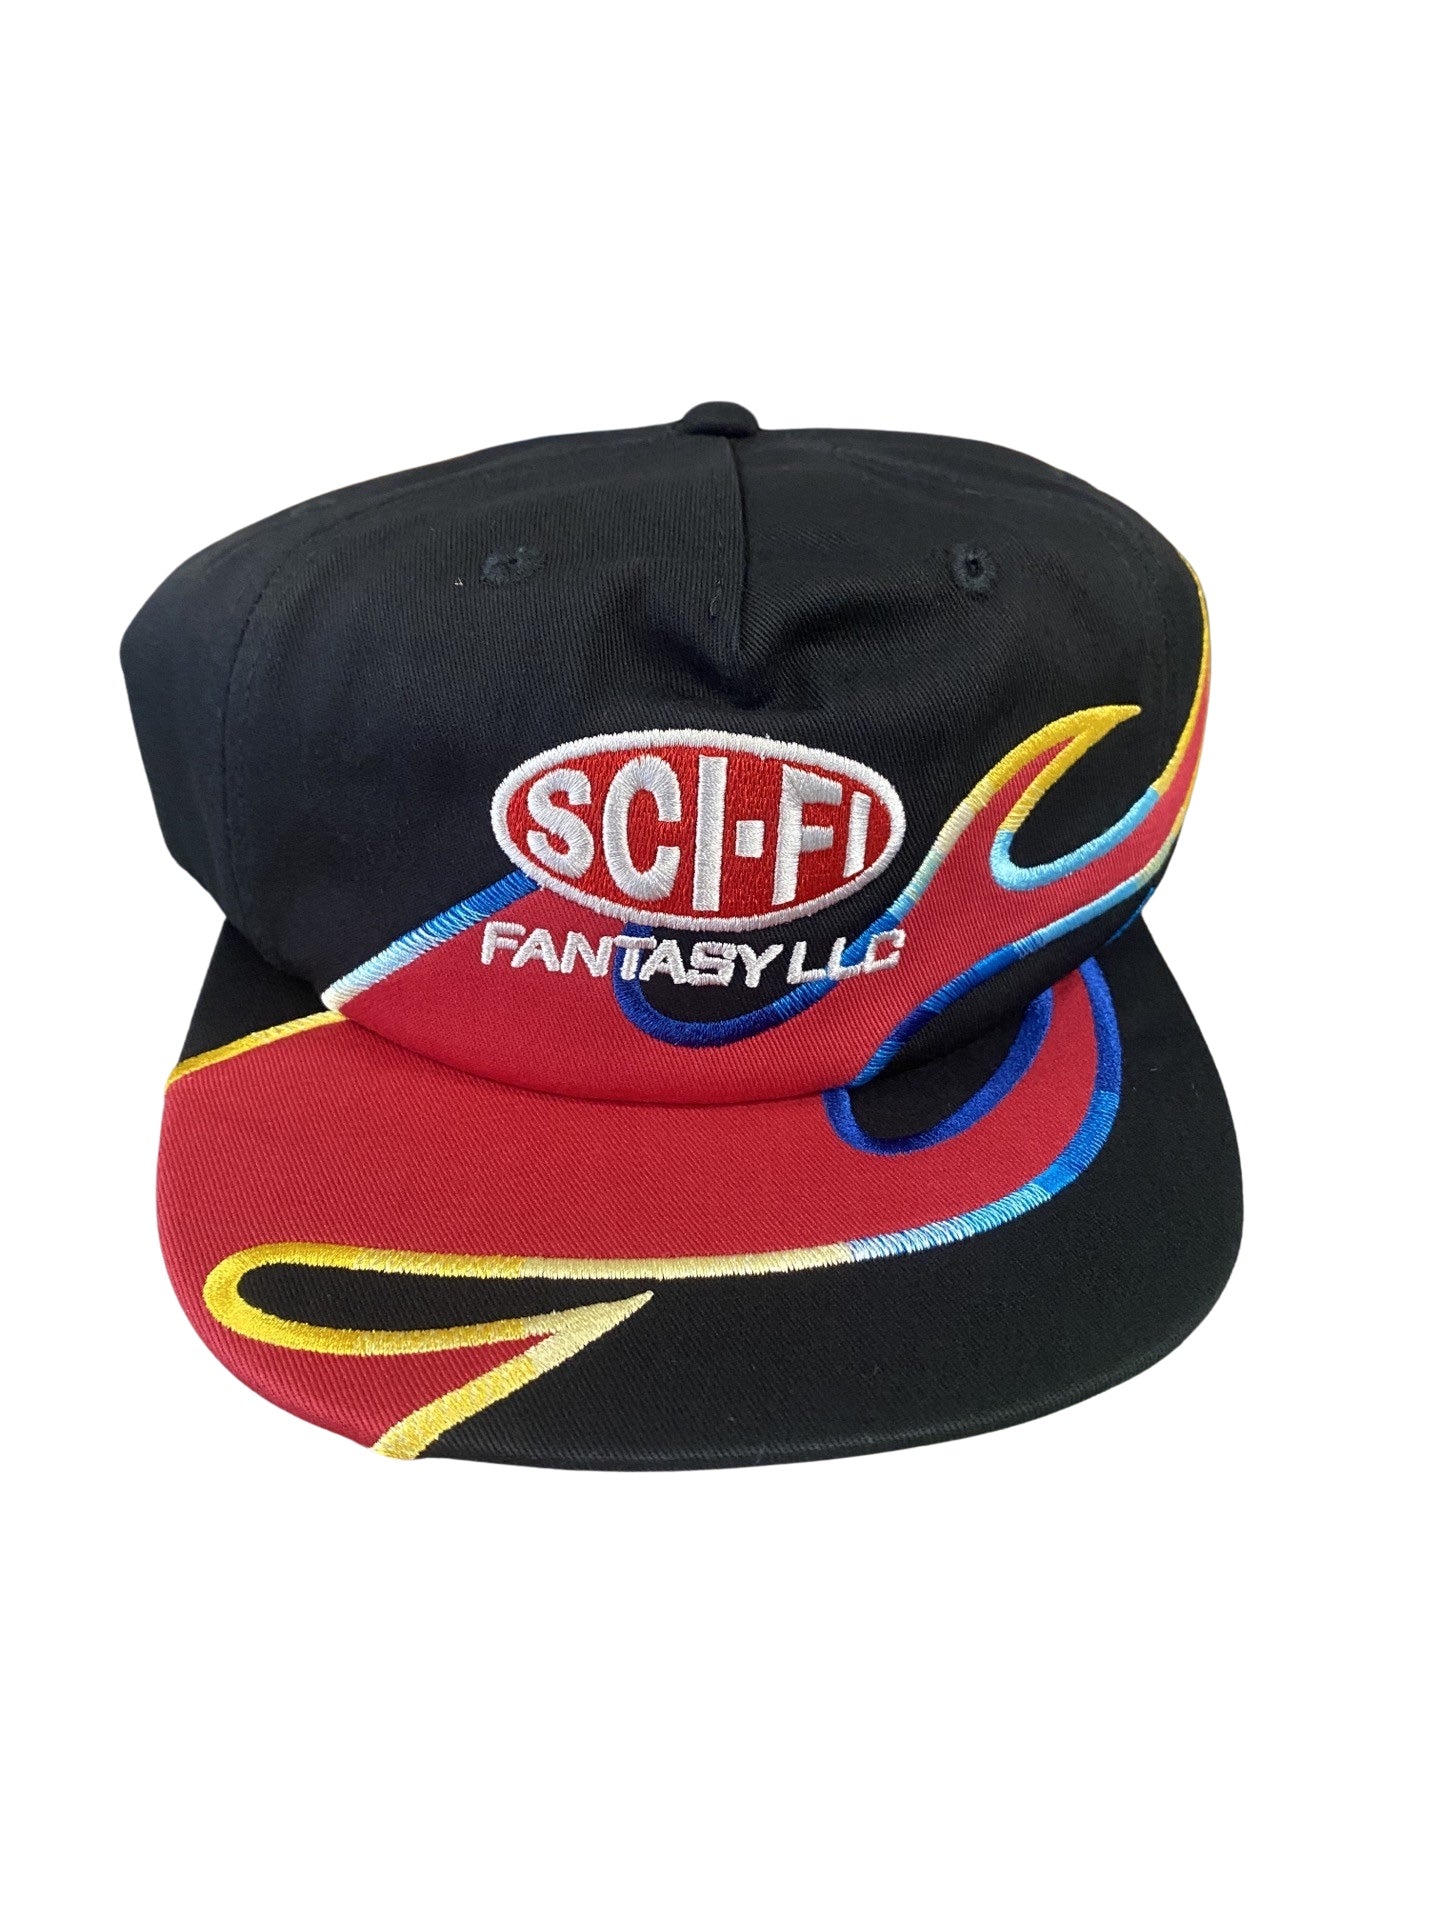 Sci Fi Fantasy Flame Hat